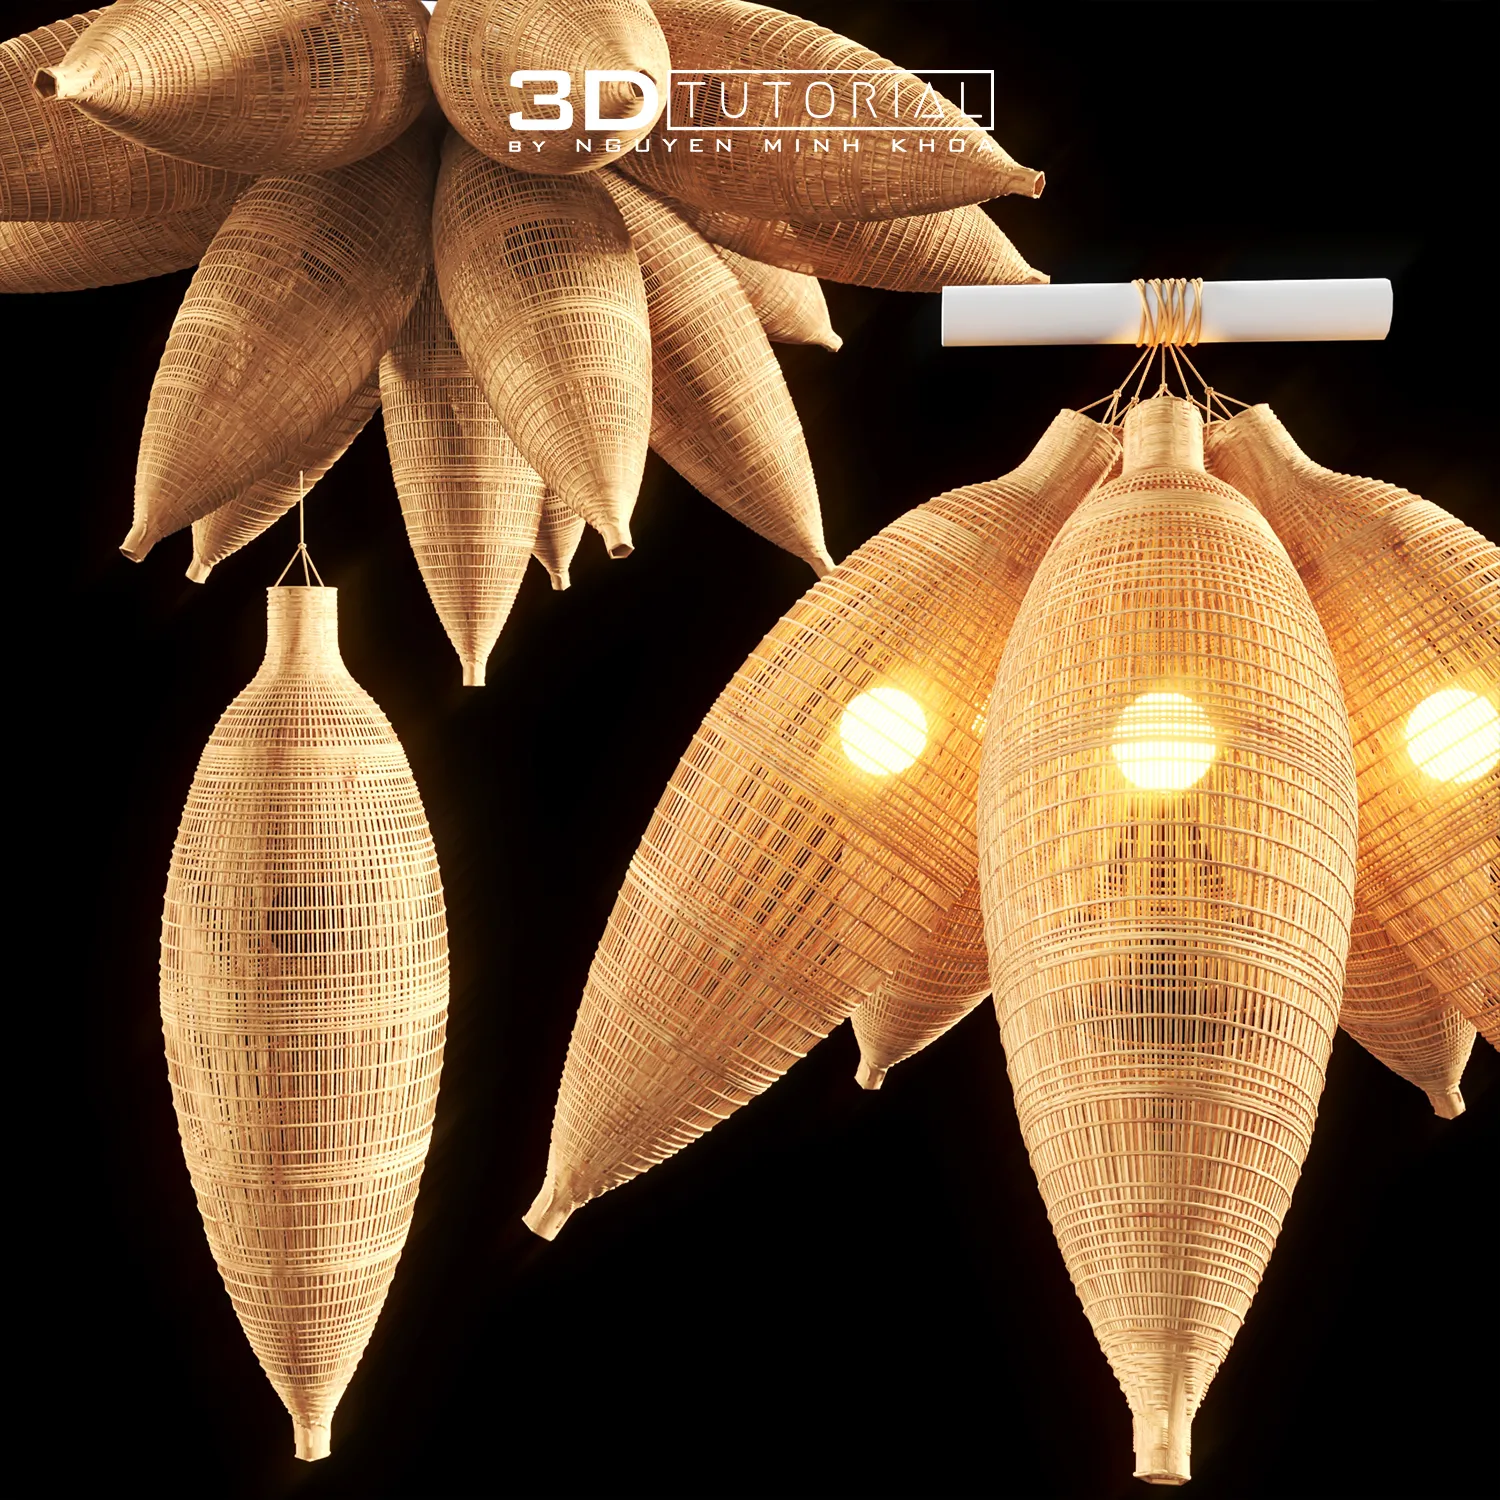 FURNITURE 3D MODELS – Lờ cá modelbyNguyenMinhKhoa